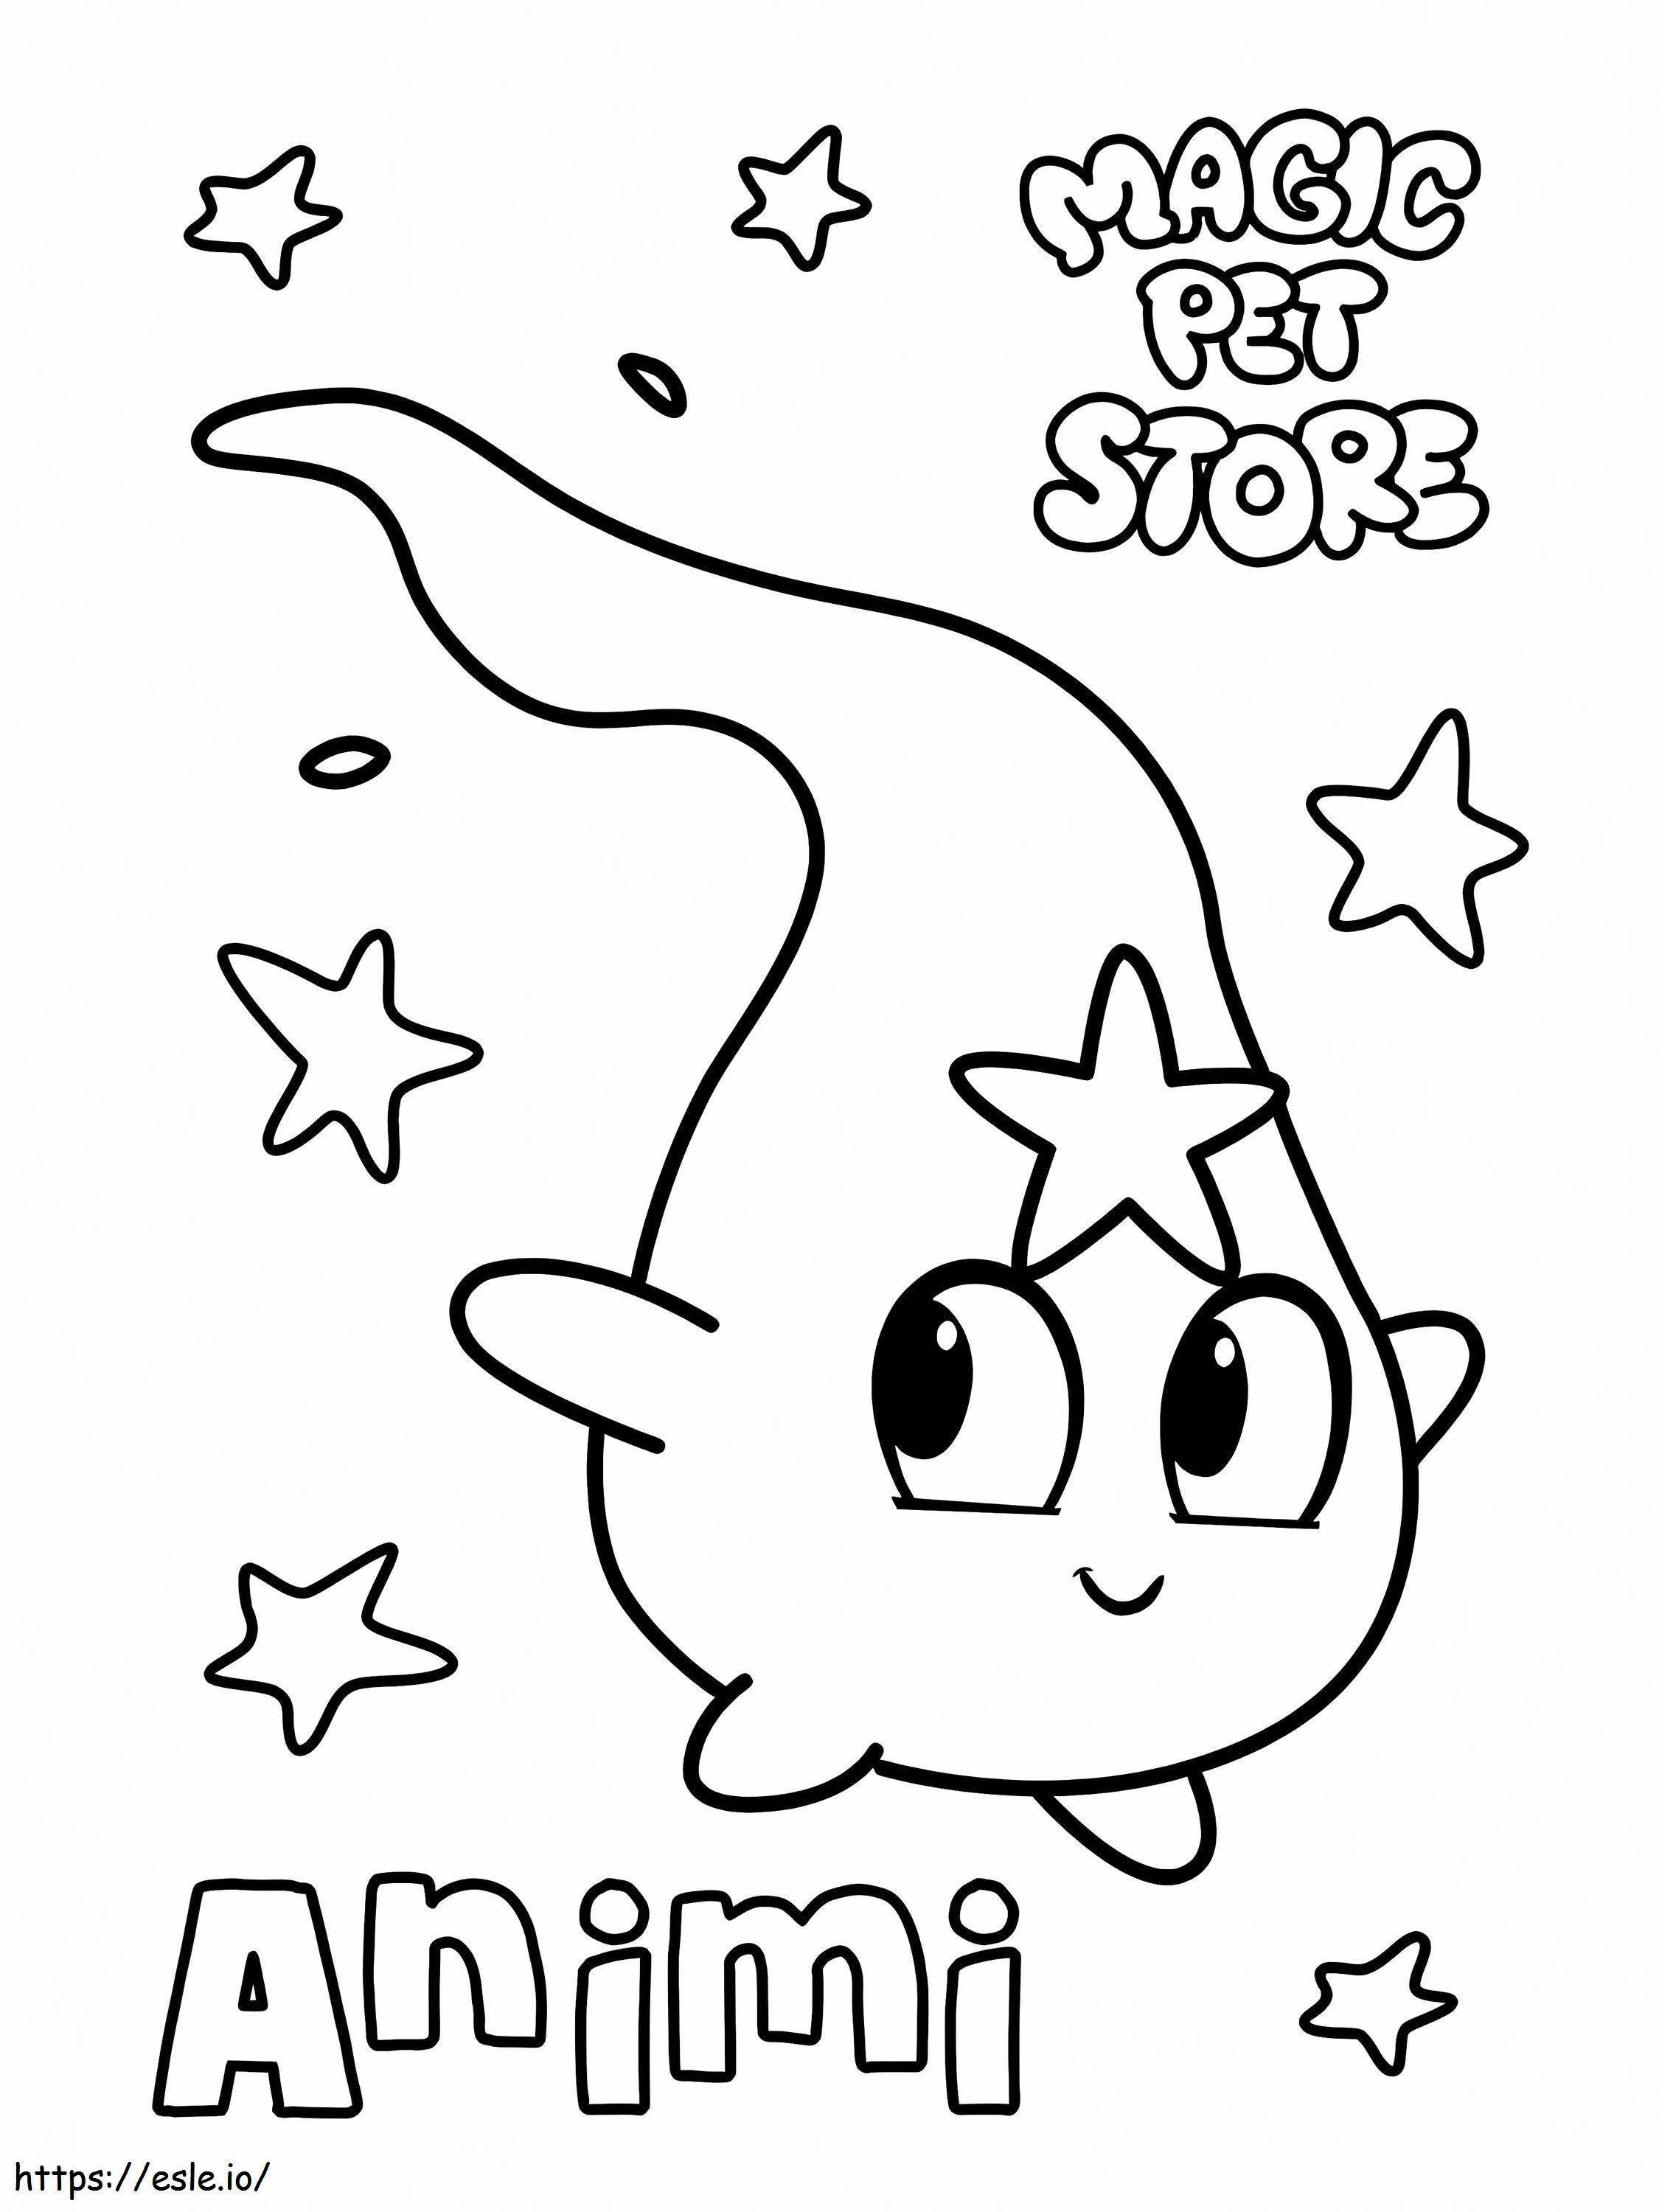 Animi a My Magic Pet Morphle-ból kifestő